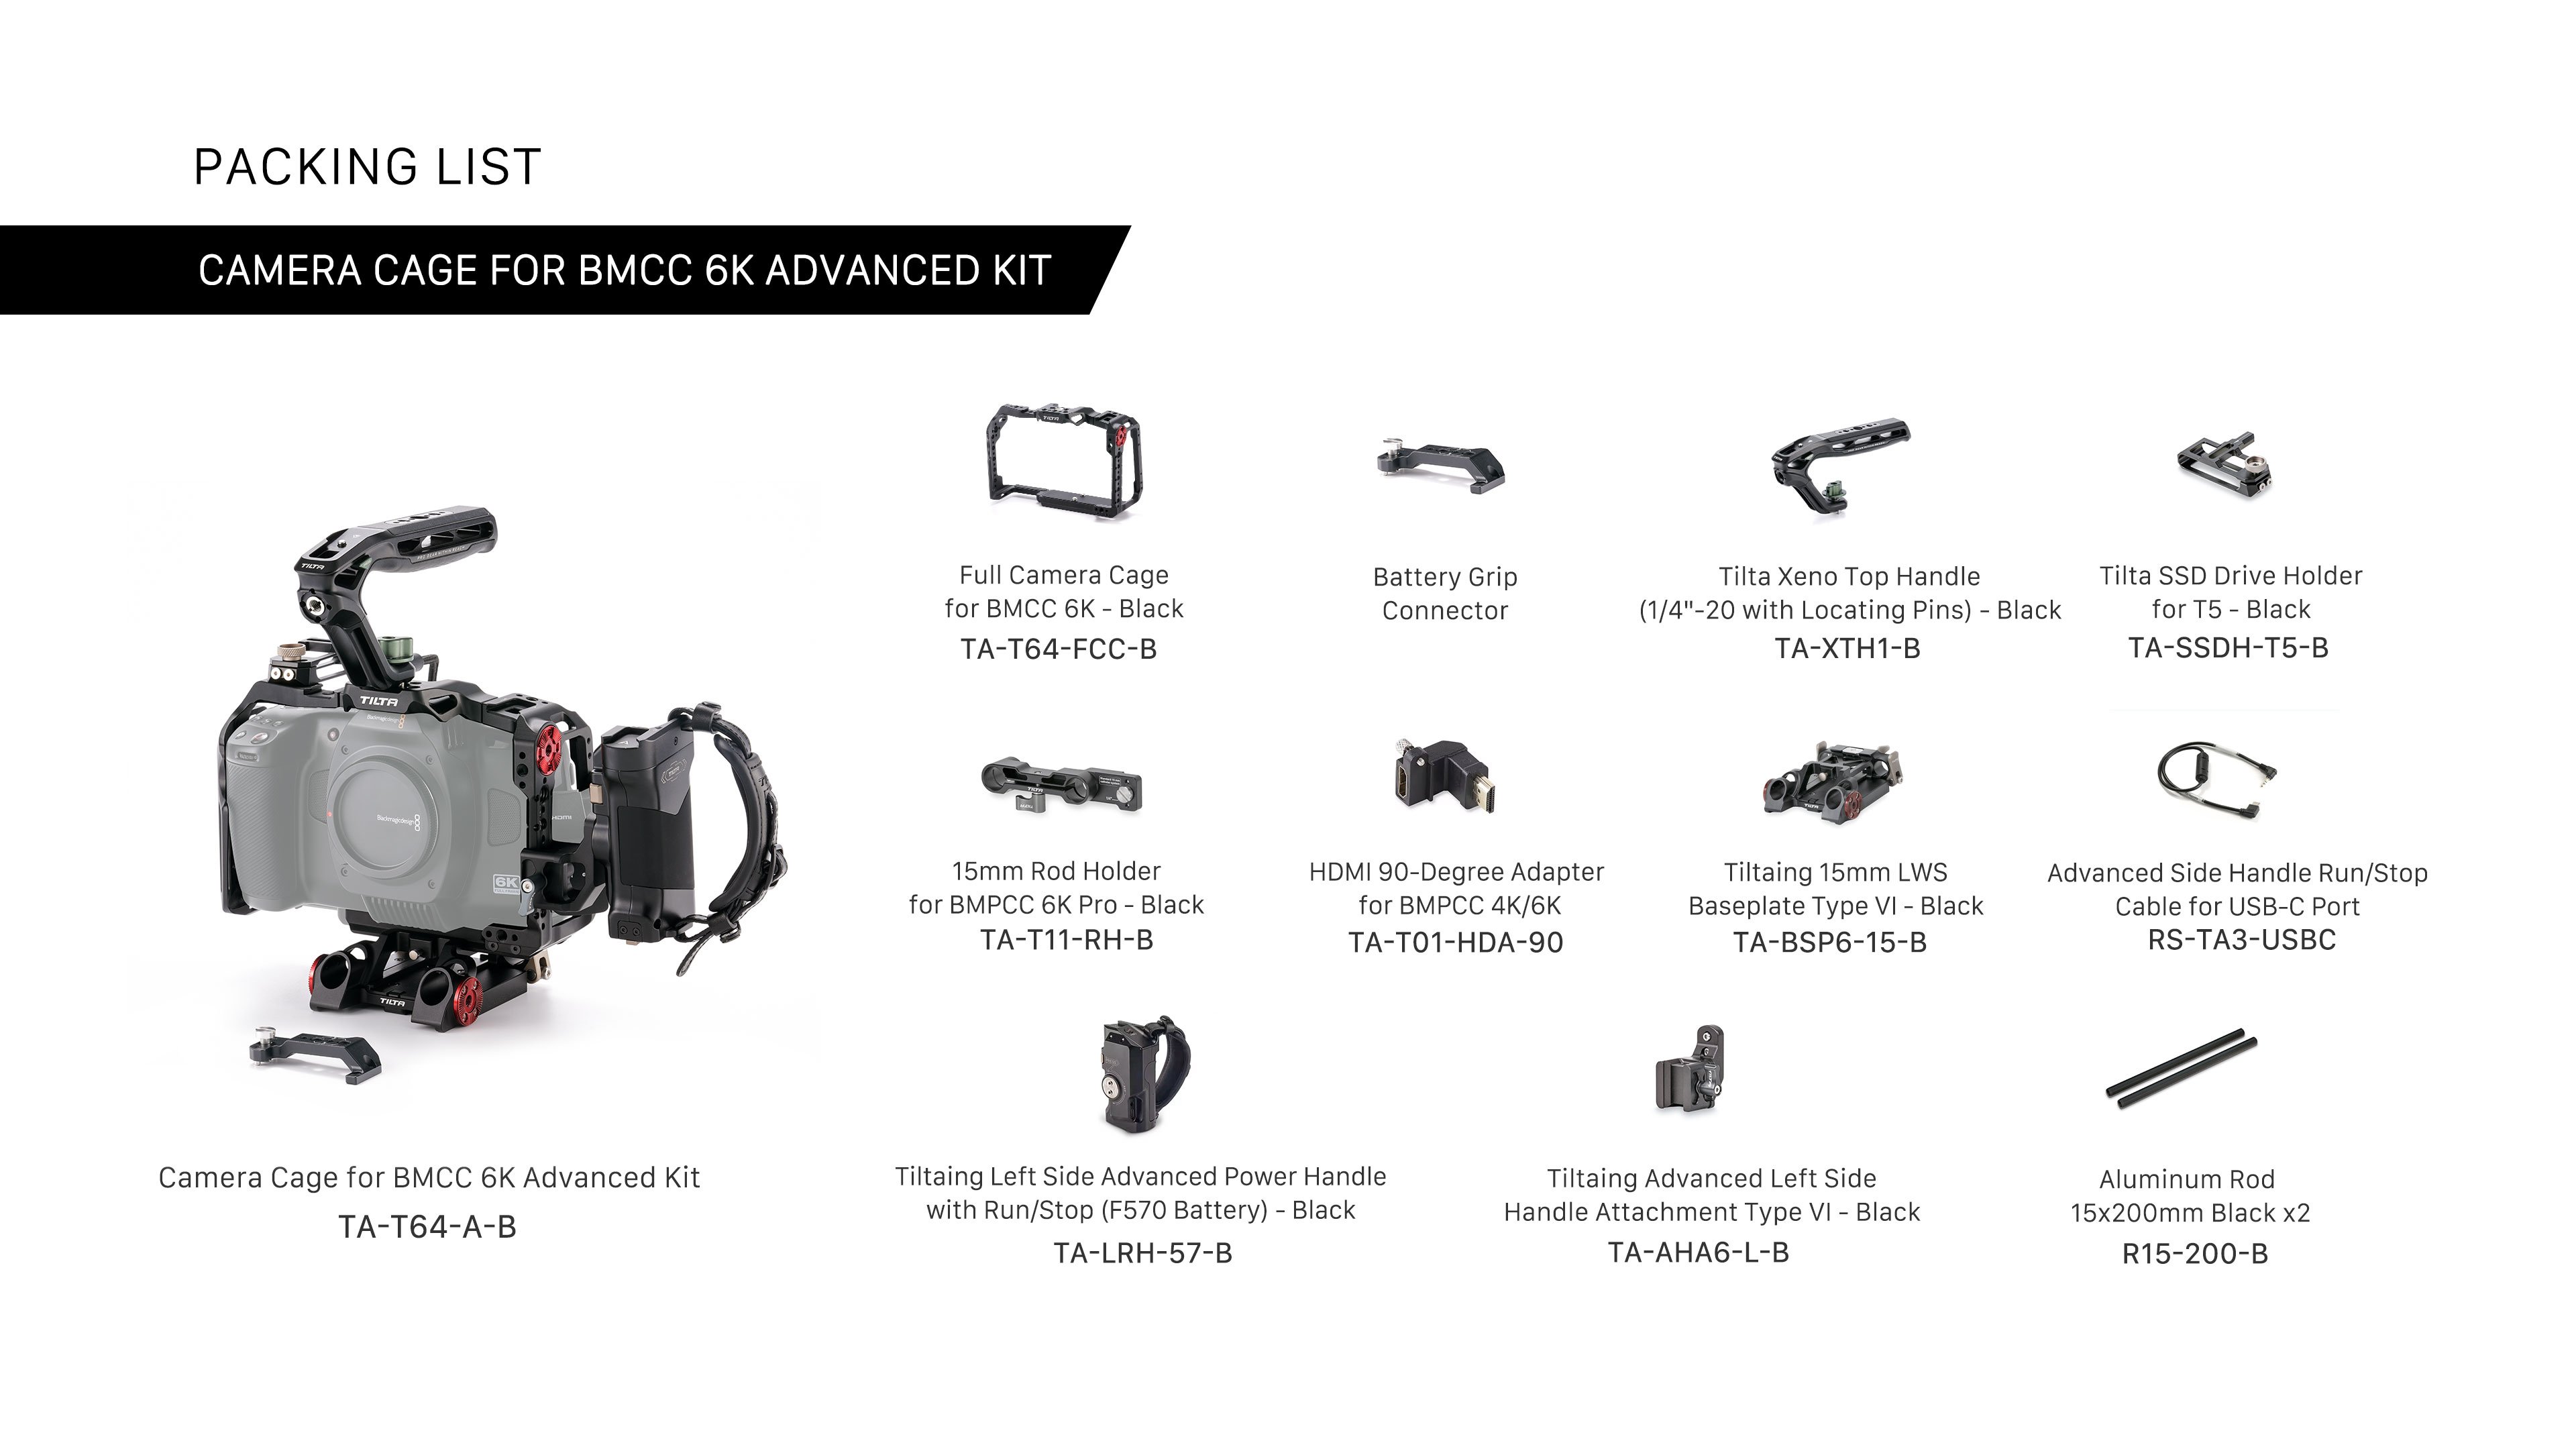 Camera Cage for BMCC 6K Basic Kit - Black